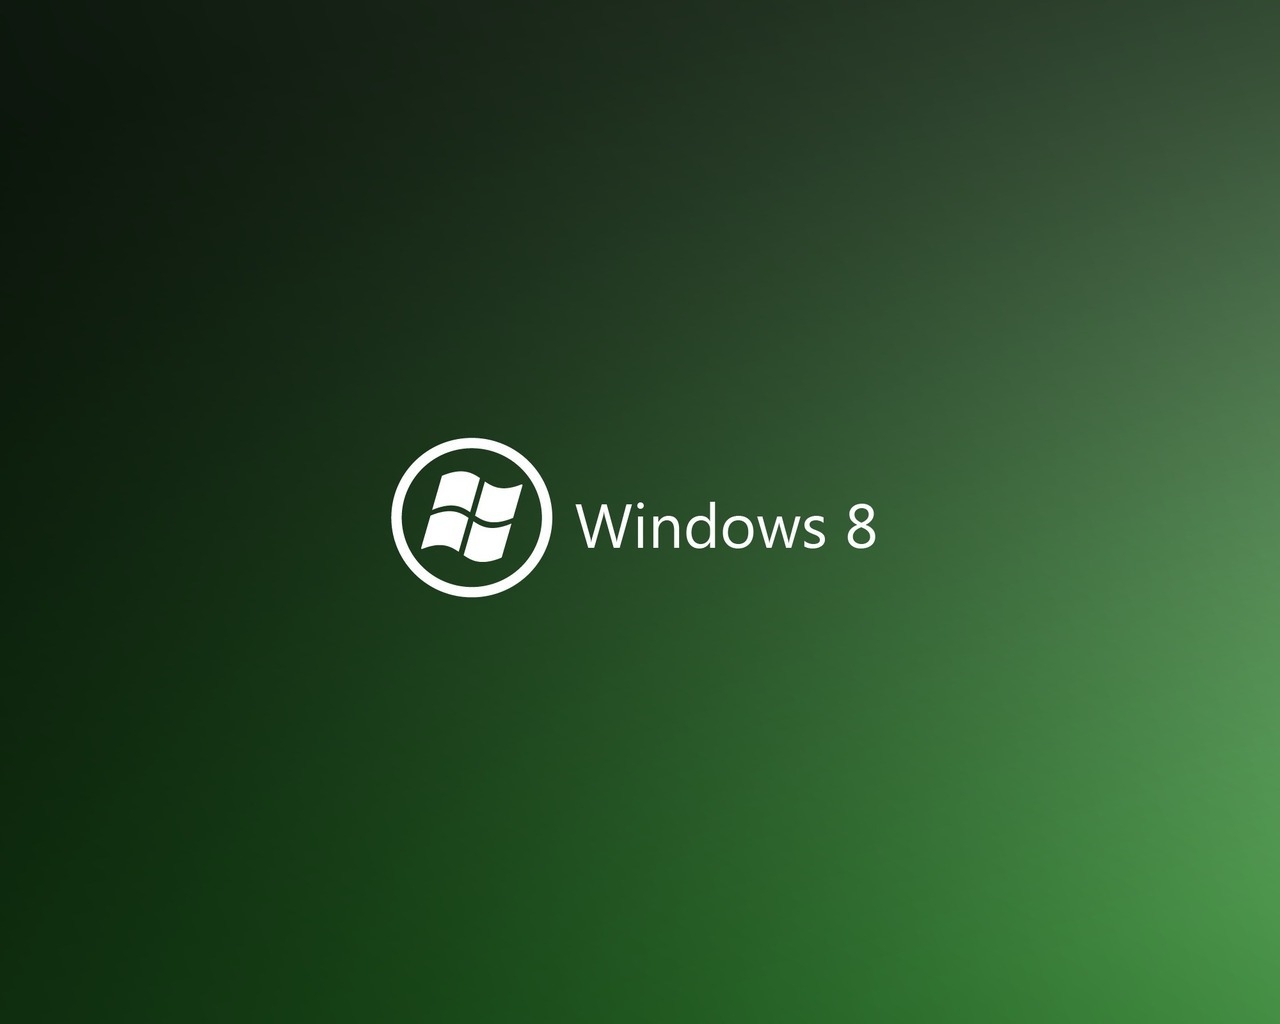 Green Windows 8 for 1280 x 1024 resolution